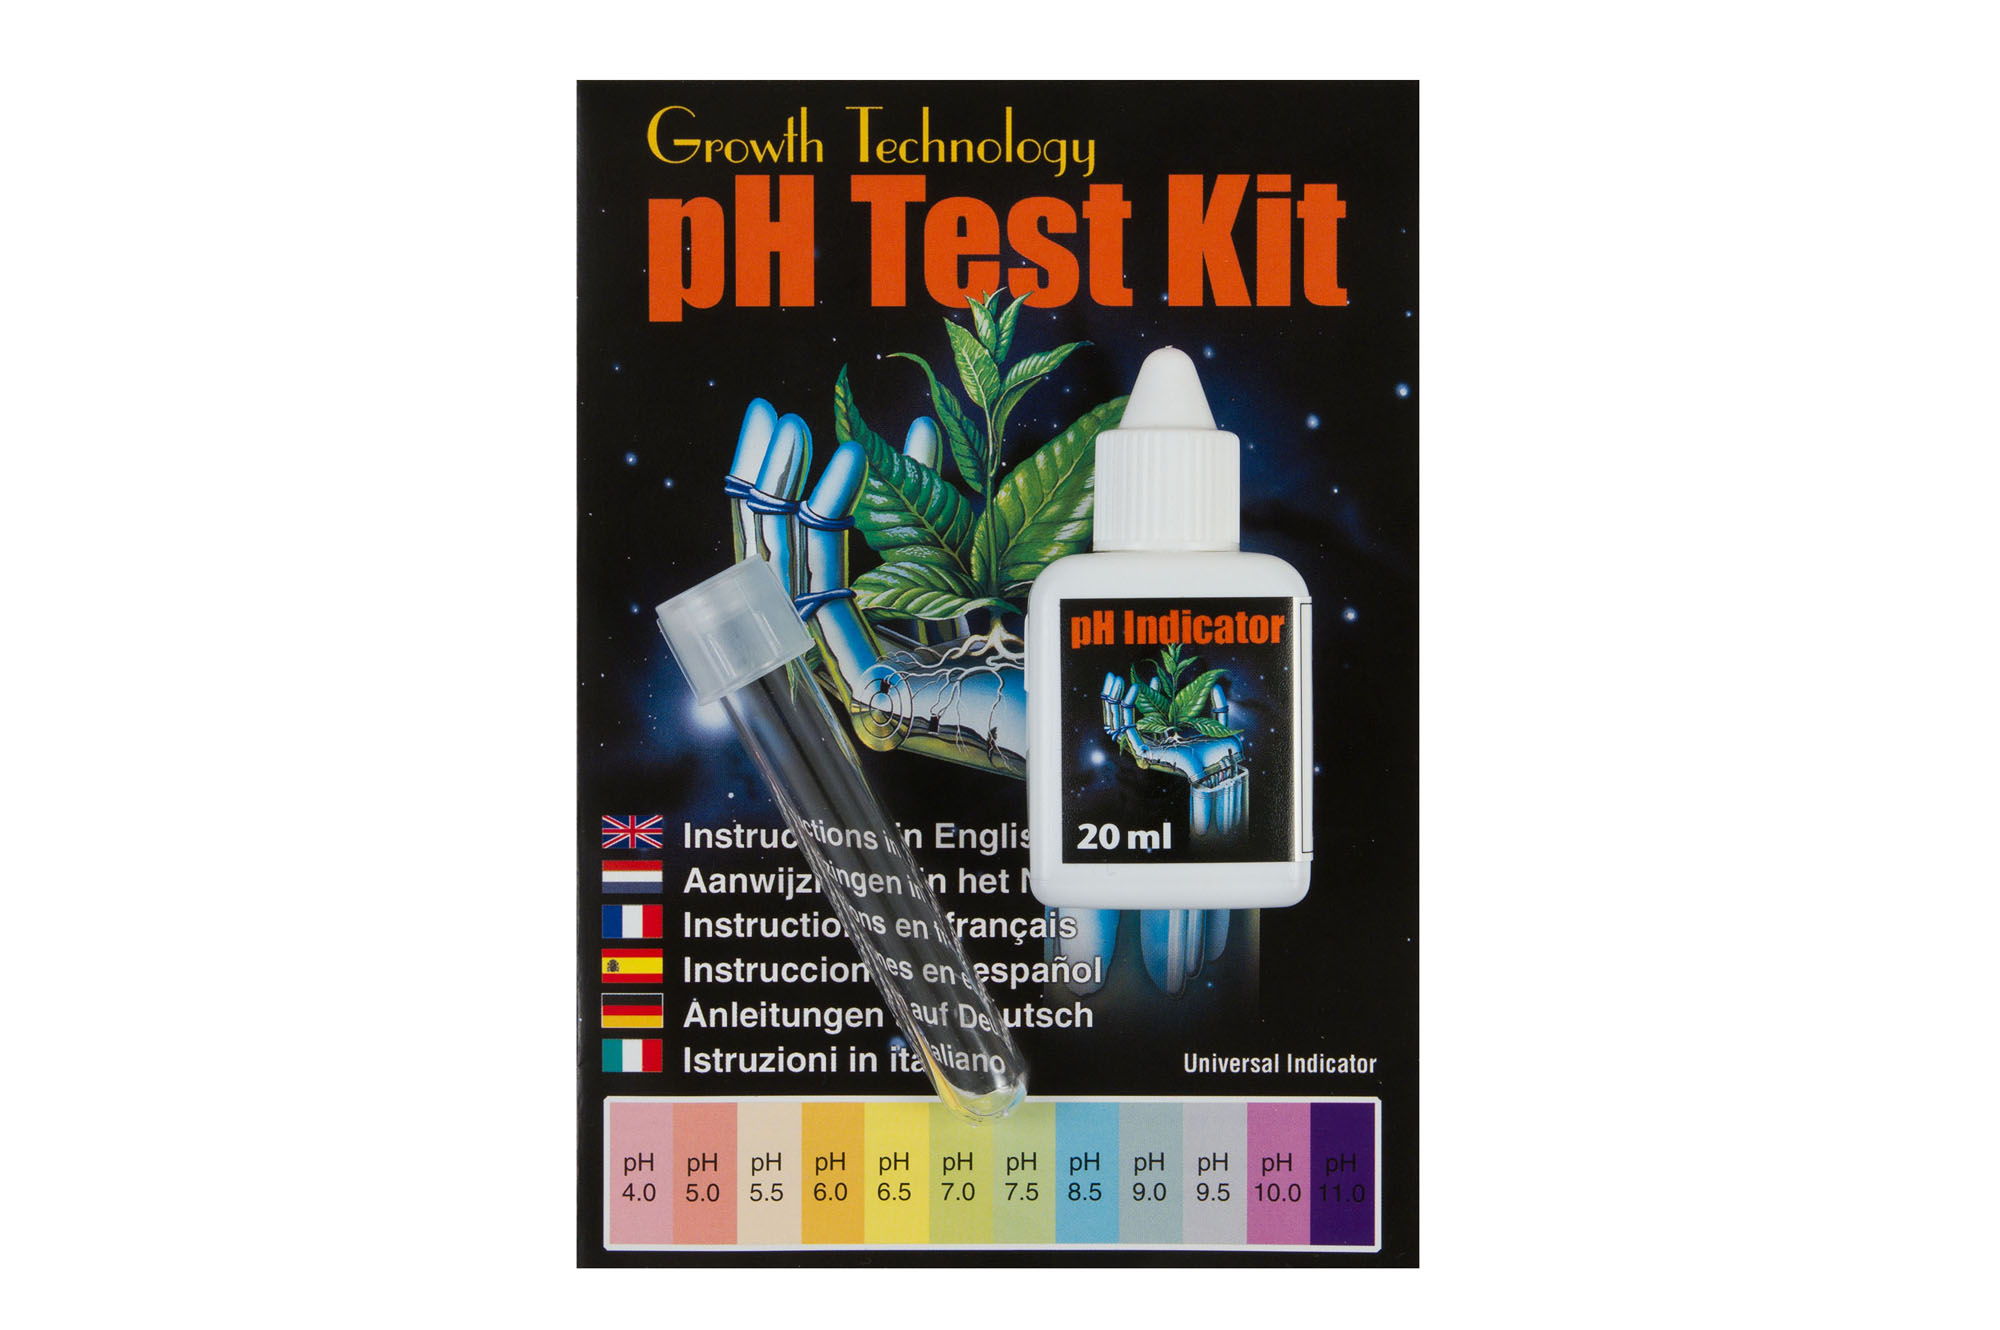 Daughter s growth test. PH Test Kit. Growth Technology. Growth Technology Clone Kit. Test Kit PH В таблетках, как пользоваться.